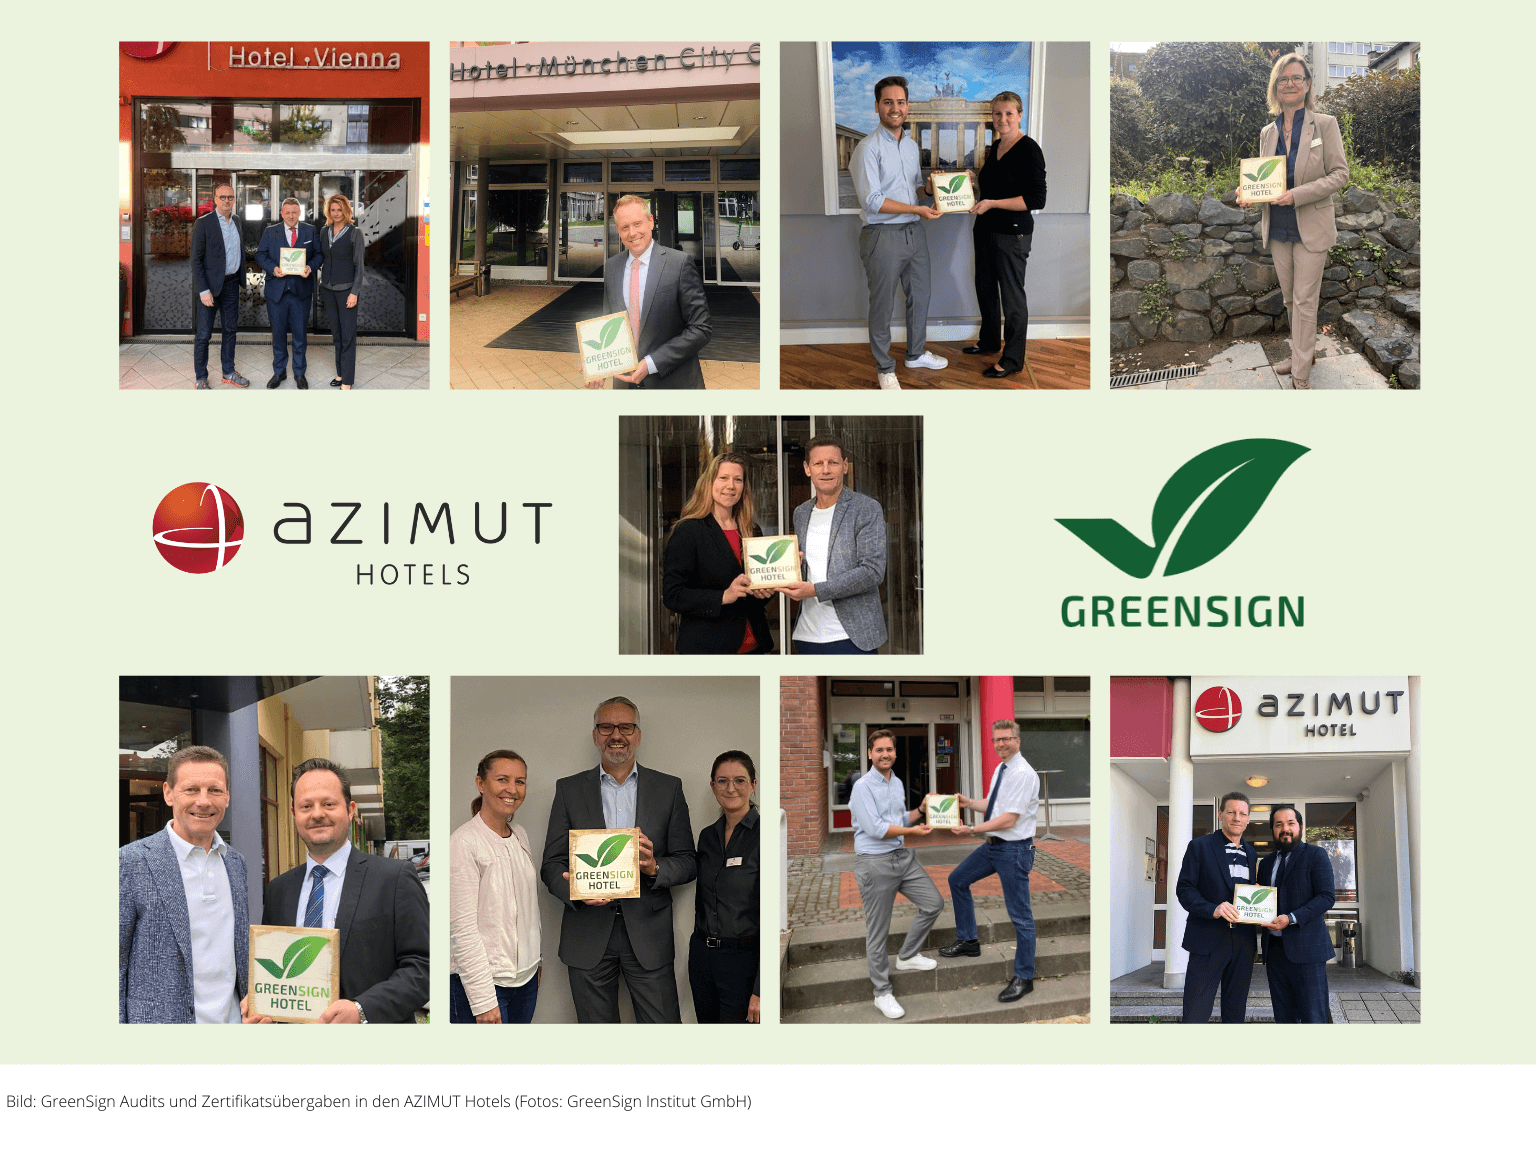 Übergabe der GreenSign Zertifikate an Azimut Hotels